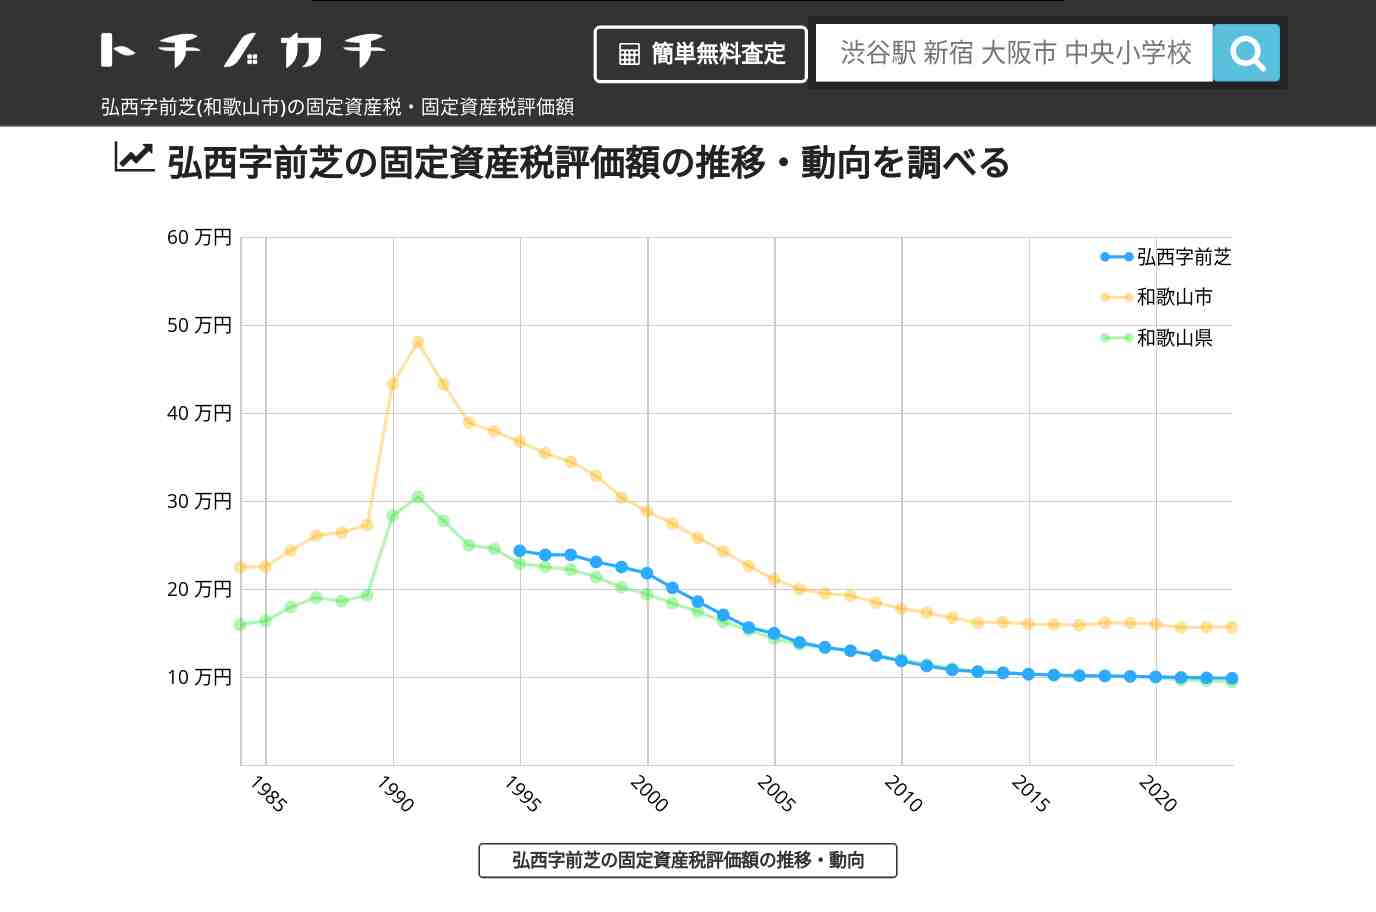 弘西字前芝(和歌山市)の固定資産税・固定資産税評価額 | トチノカチ